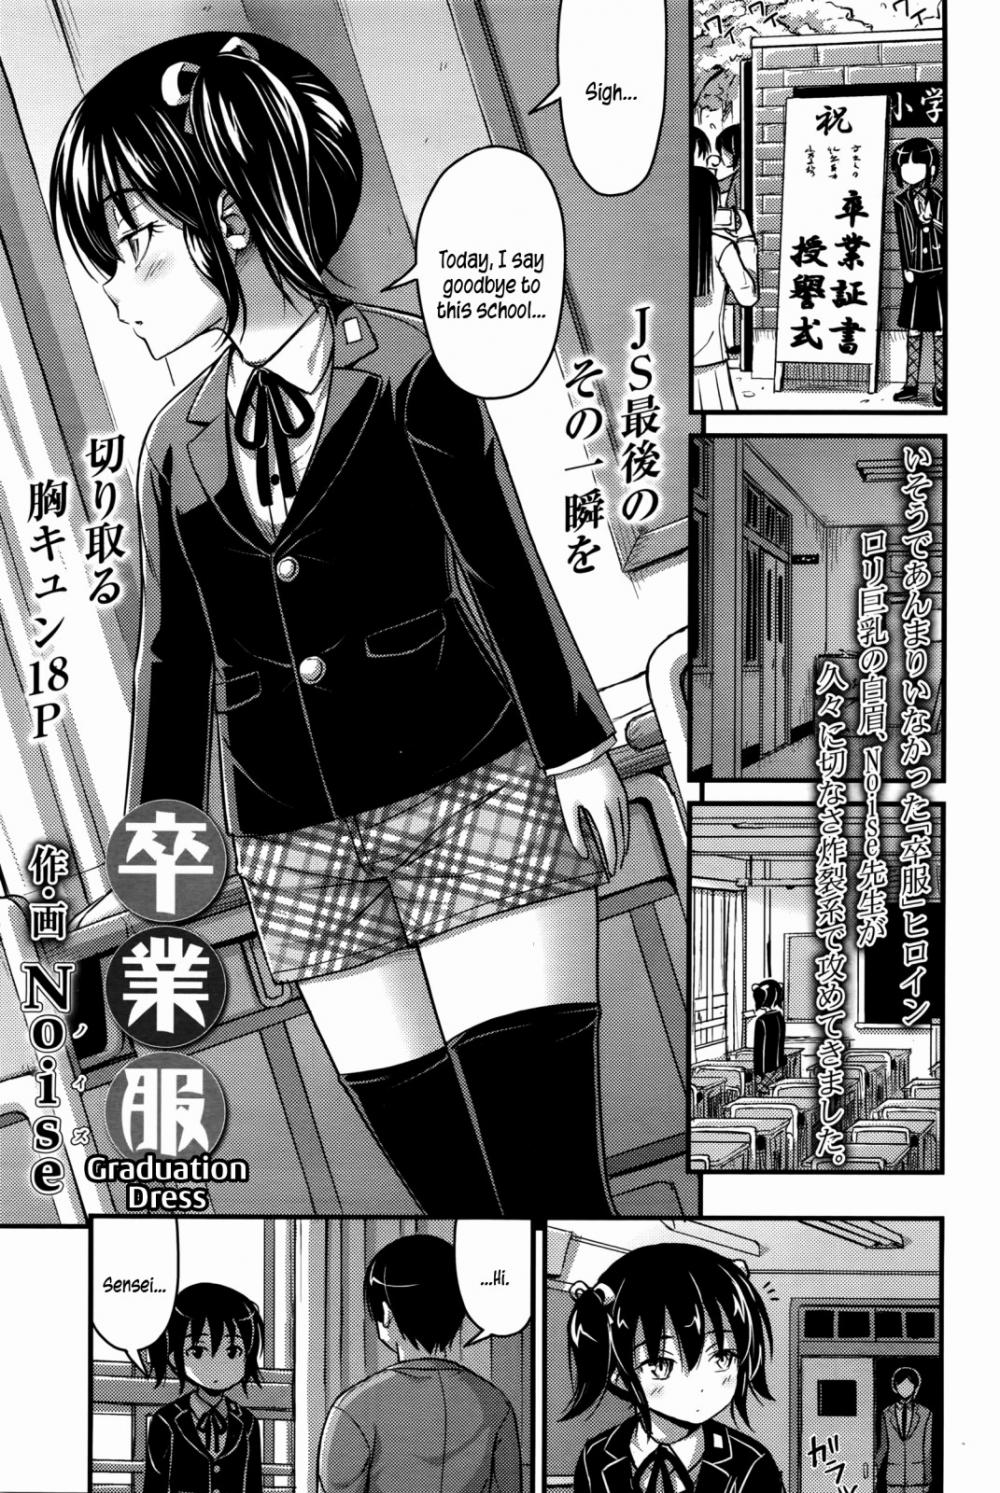 Hentai Manga Comic-Graduation Dress-Read-1